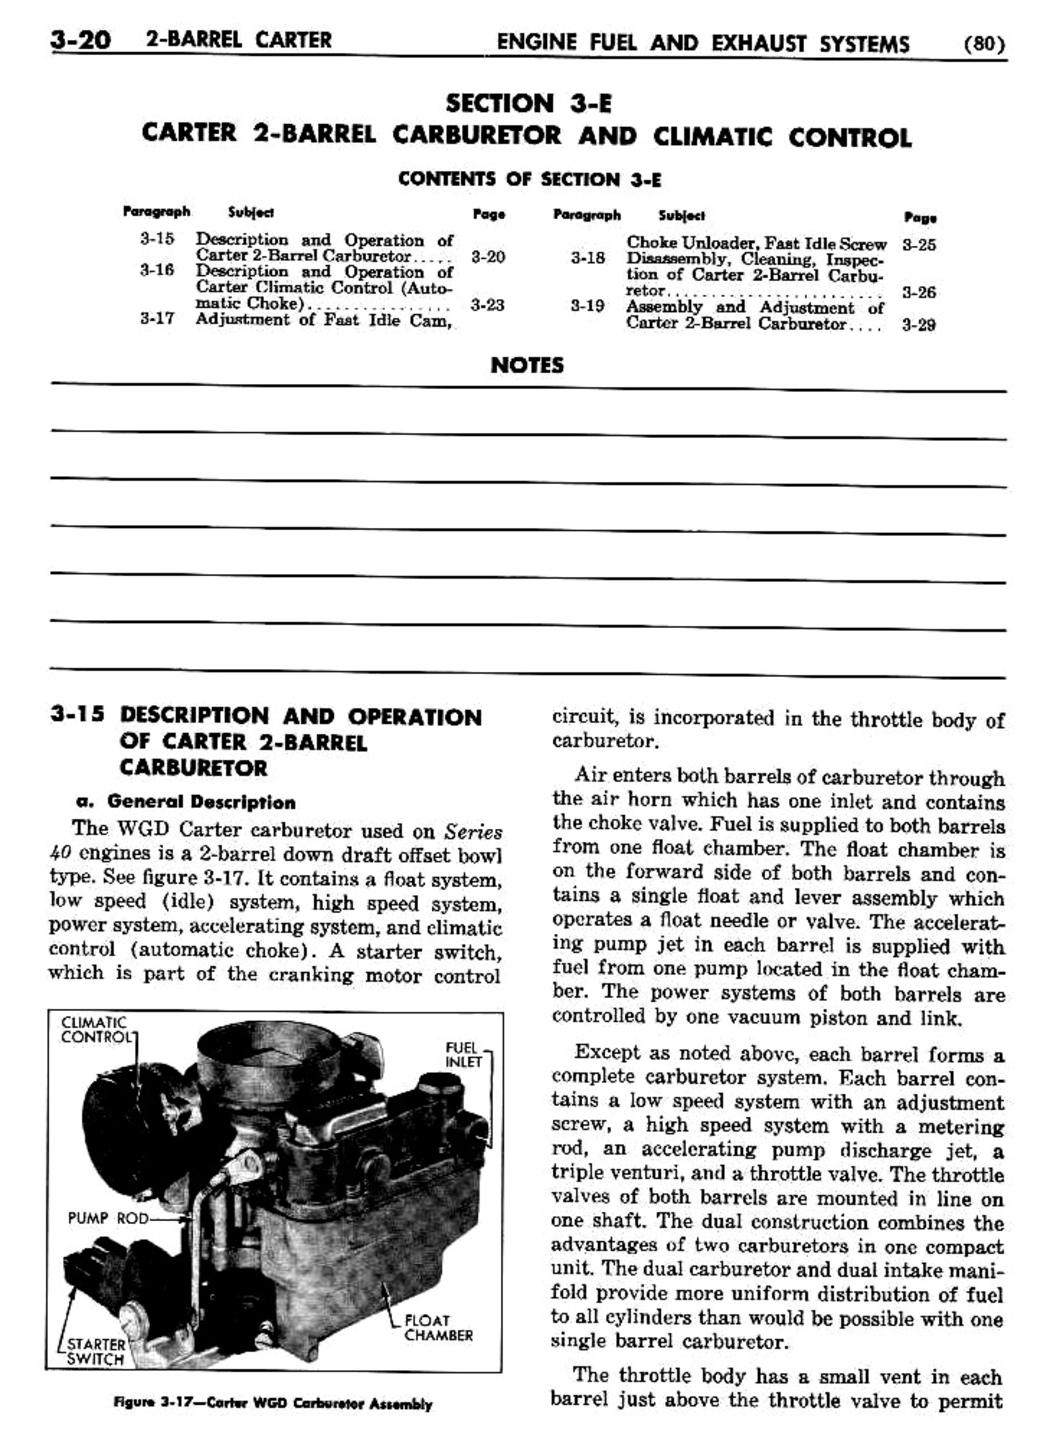 n_04 1956 Buick Shop Manual - Engine Fuel & Exhaust-020-020.jpg